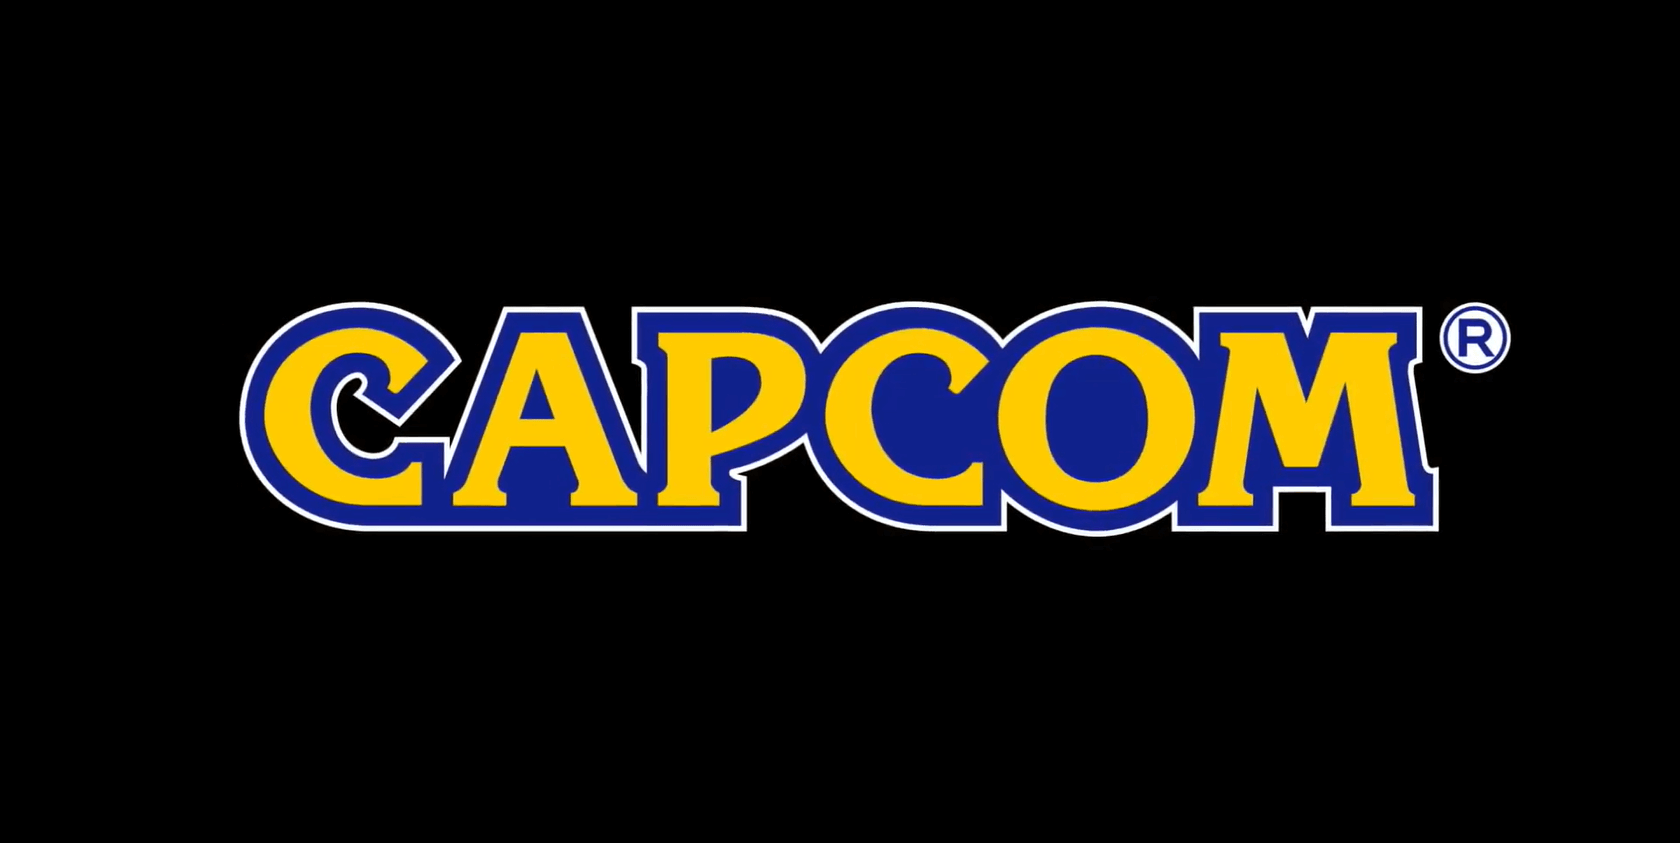 Capcom Celebrates a Legacy of Hits